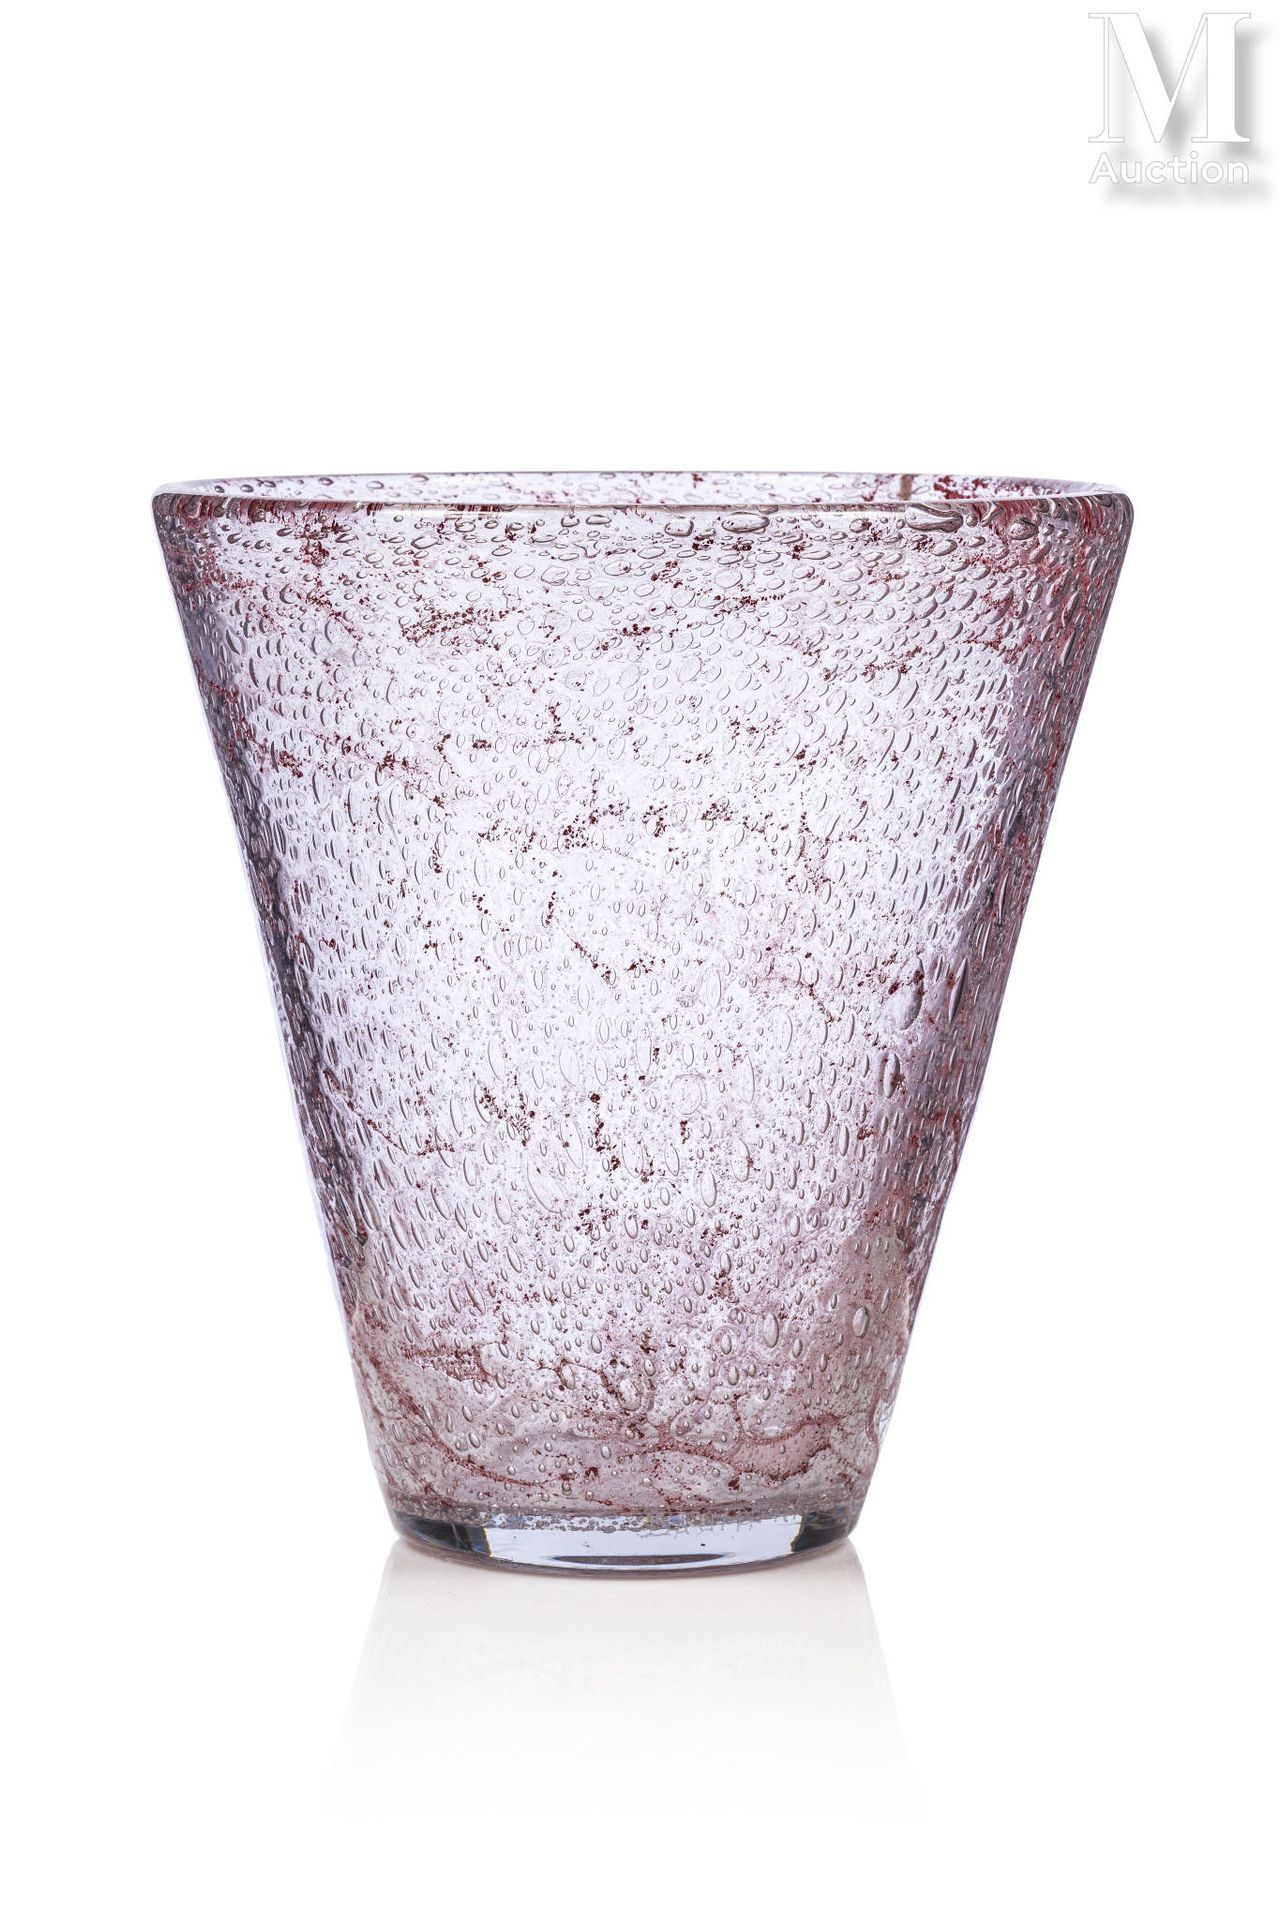 DAUM - Nancy FRANCE Vase aus dickem Blasenglas mit rosa-rotem Pulverdekor.

Sign&hellip;